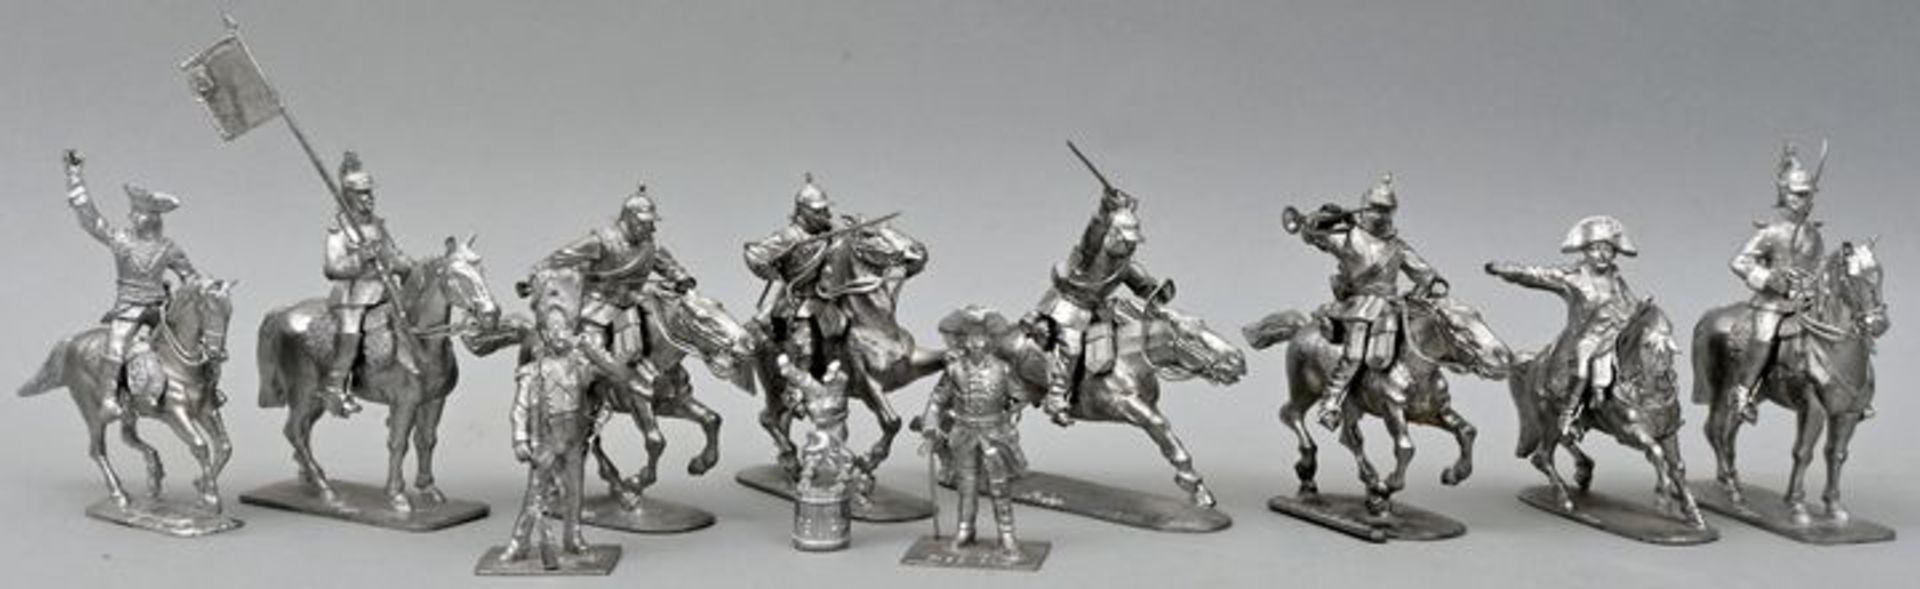 Konvolut Zinnfiguren / set of pewter military figures